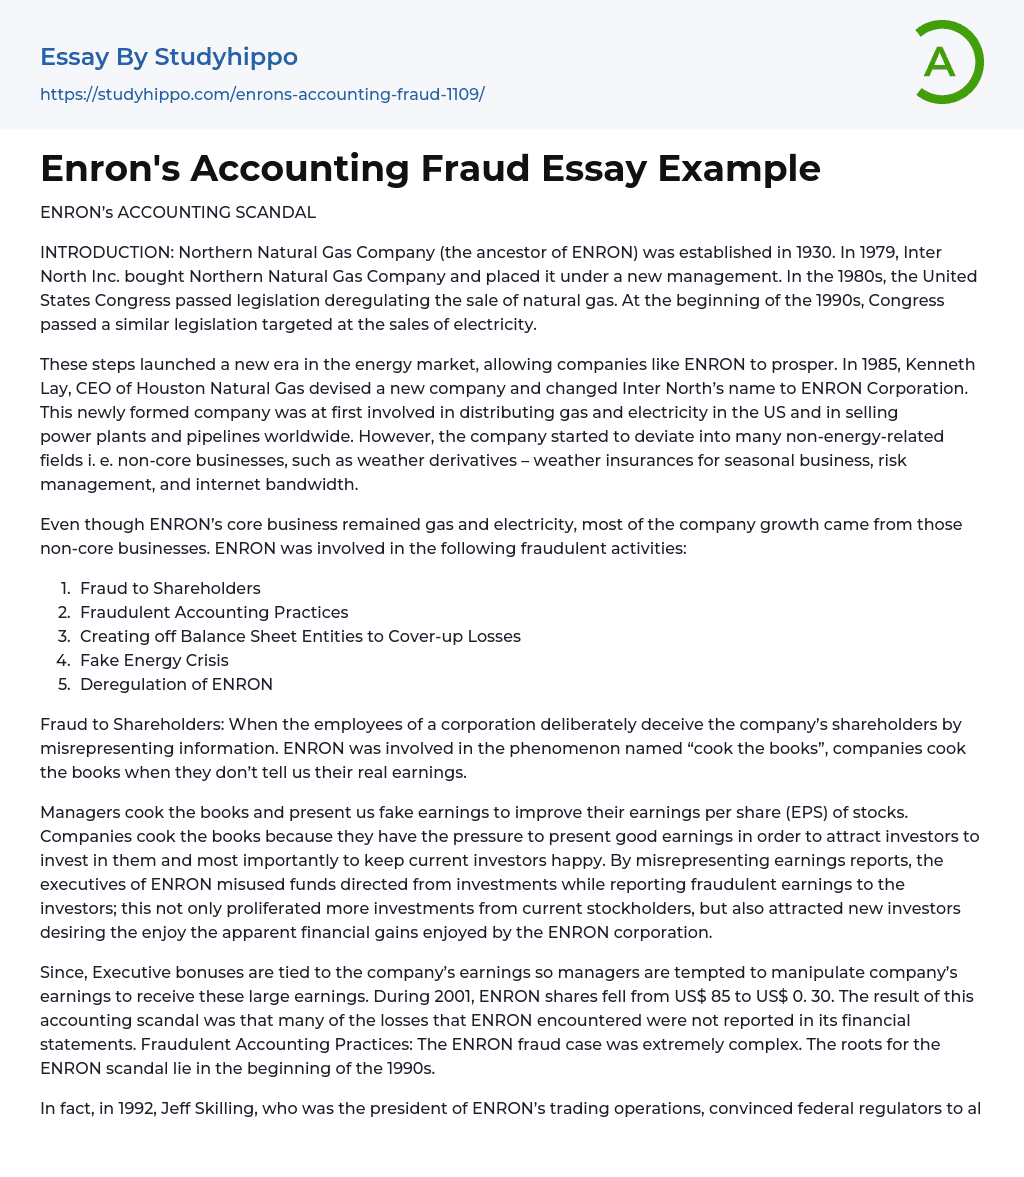 Enron’s Accounting Fraud Essay Example